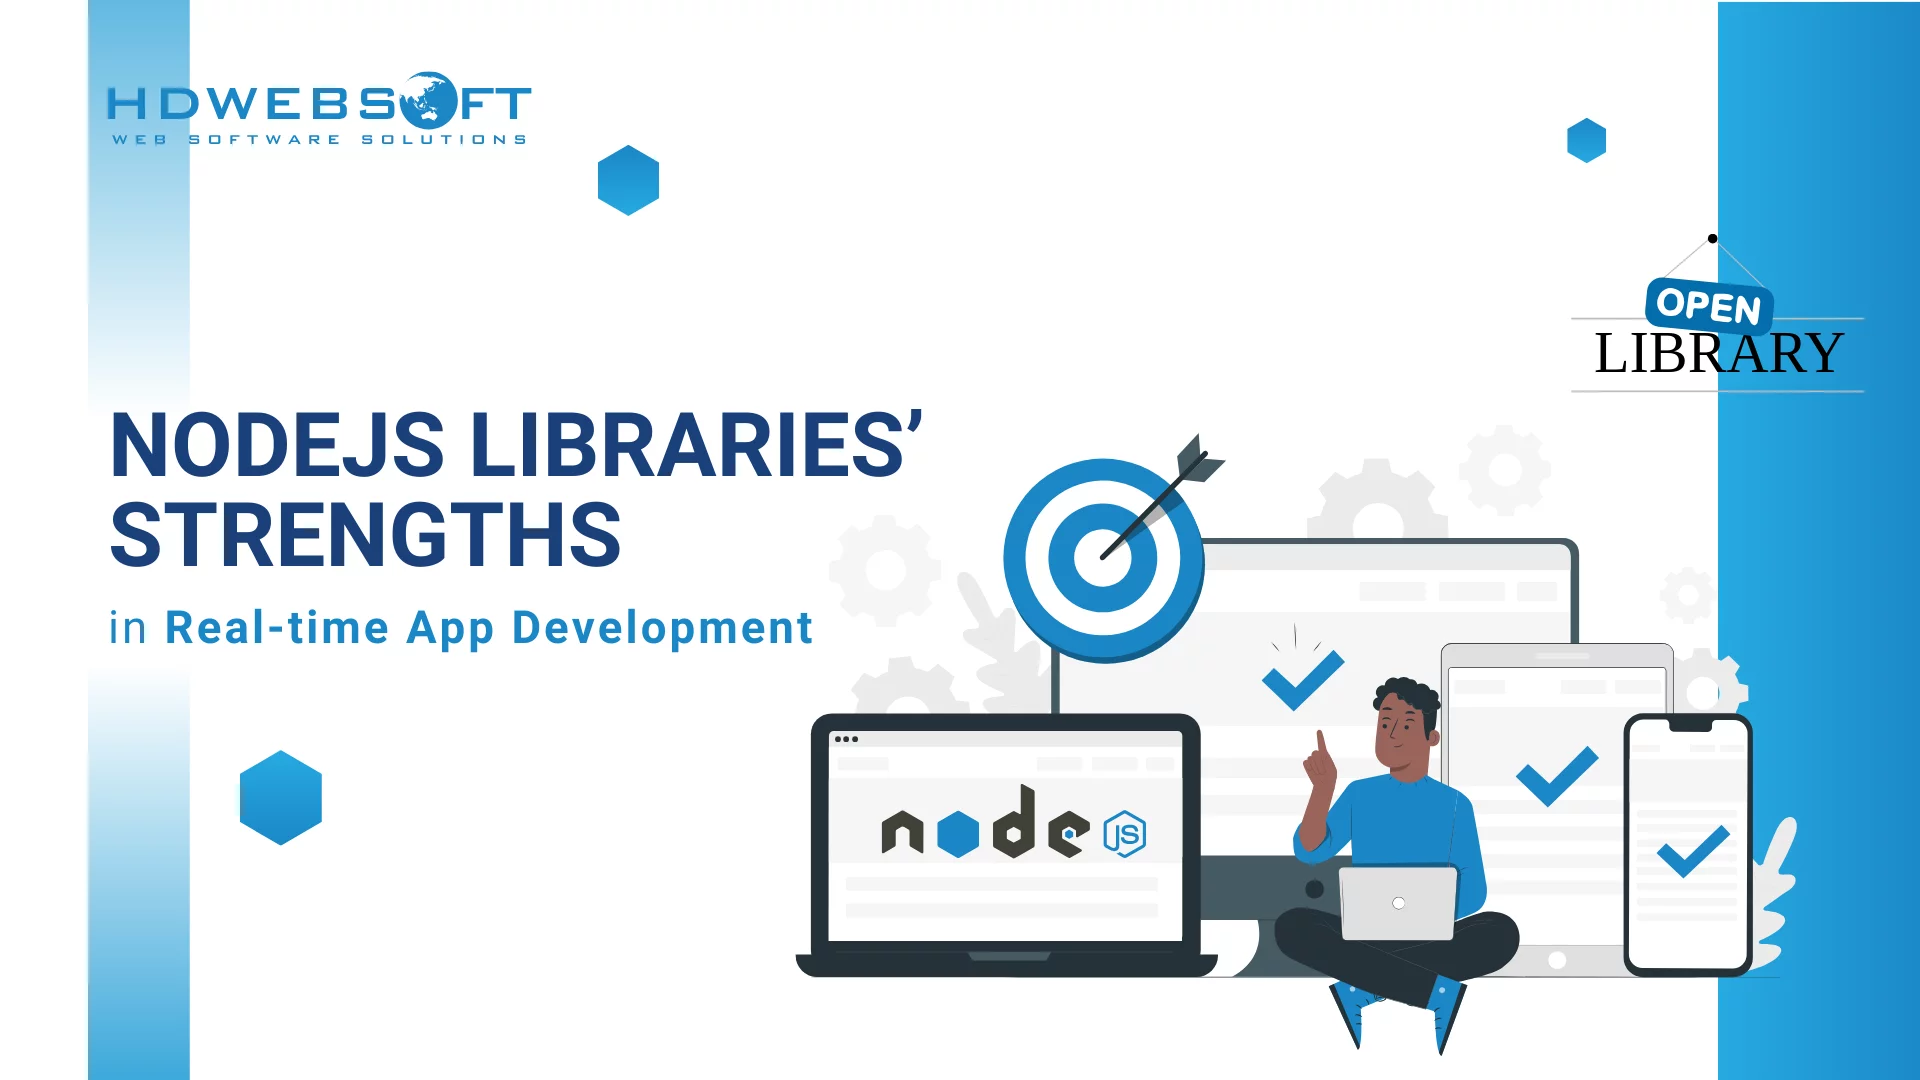 NodeJS Libraries’ Strengths in Real-time App Development